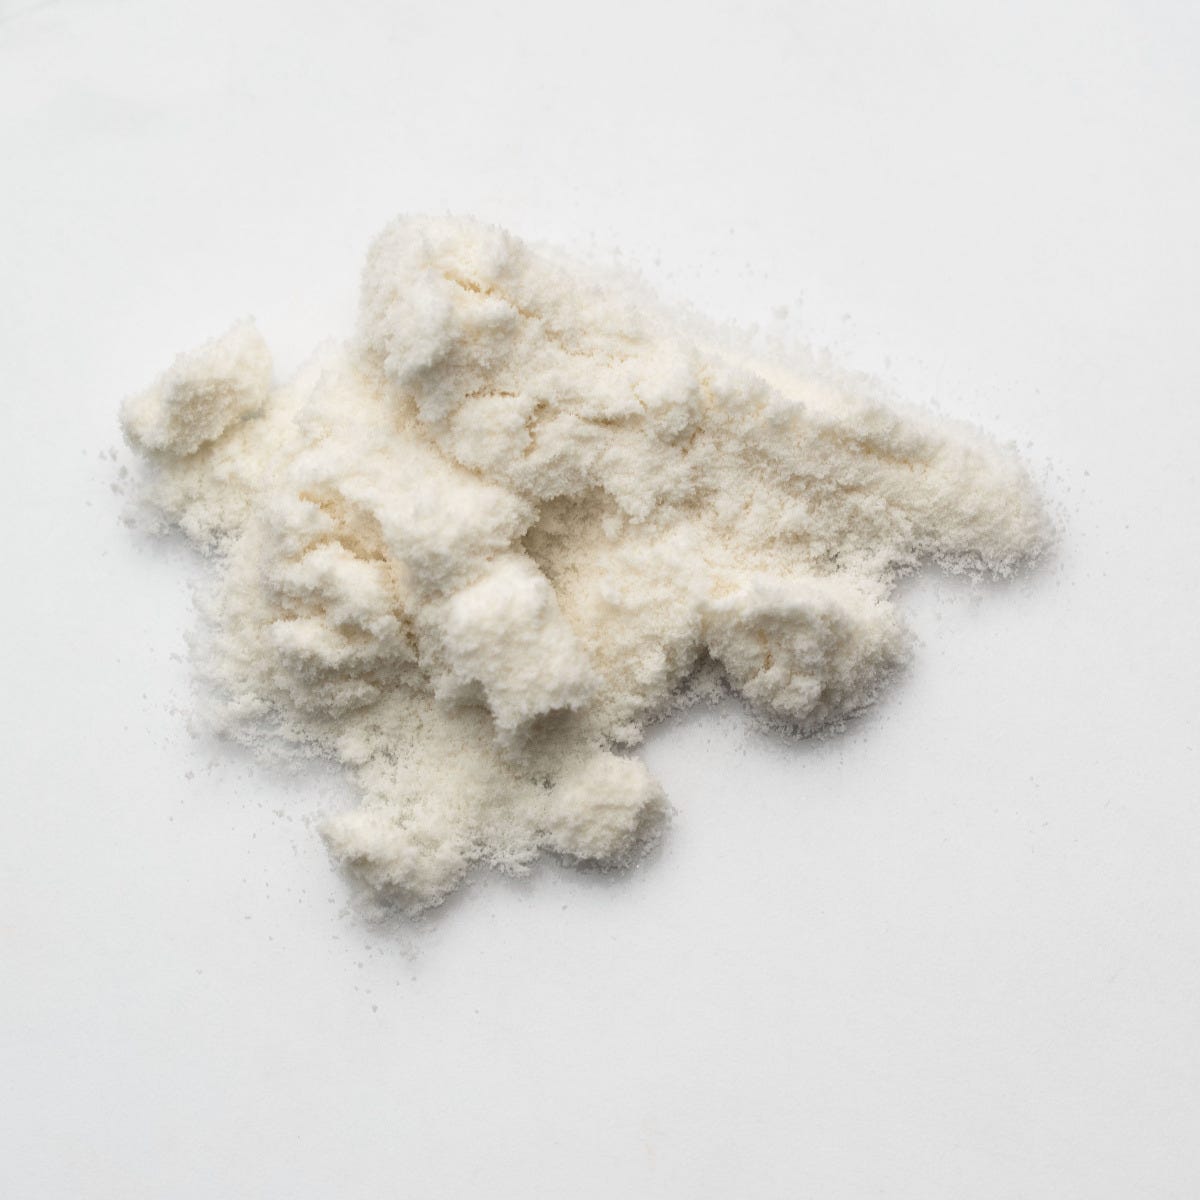 Acacia Gum Powder (Certified Organic)